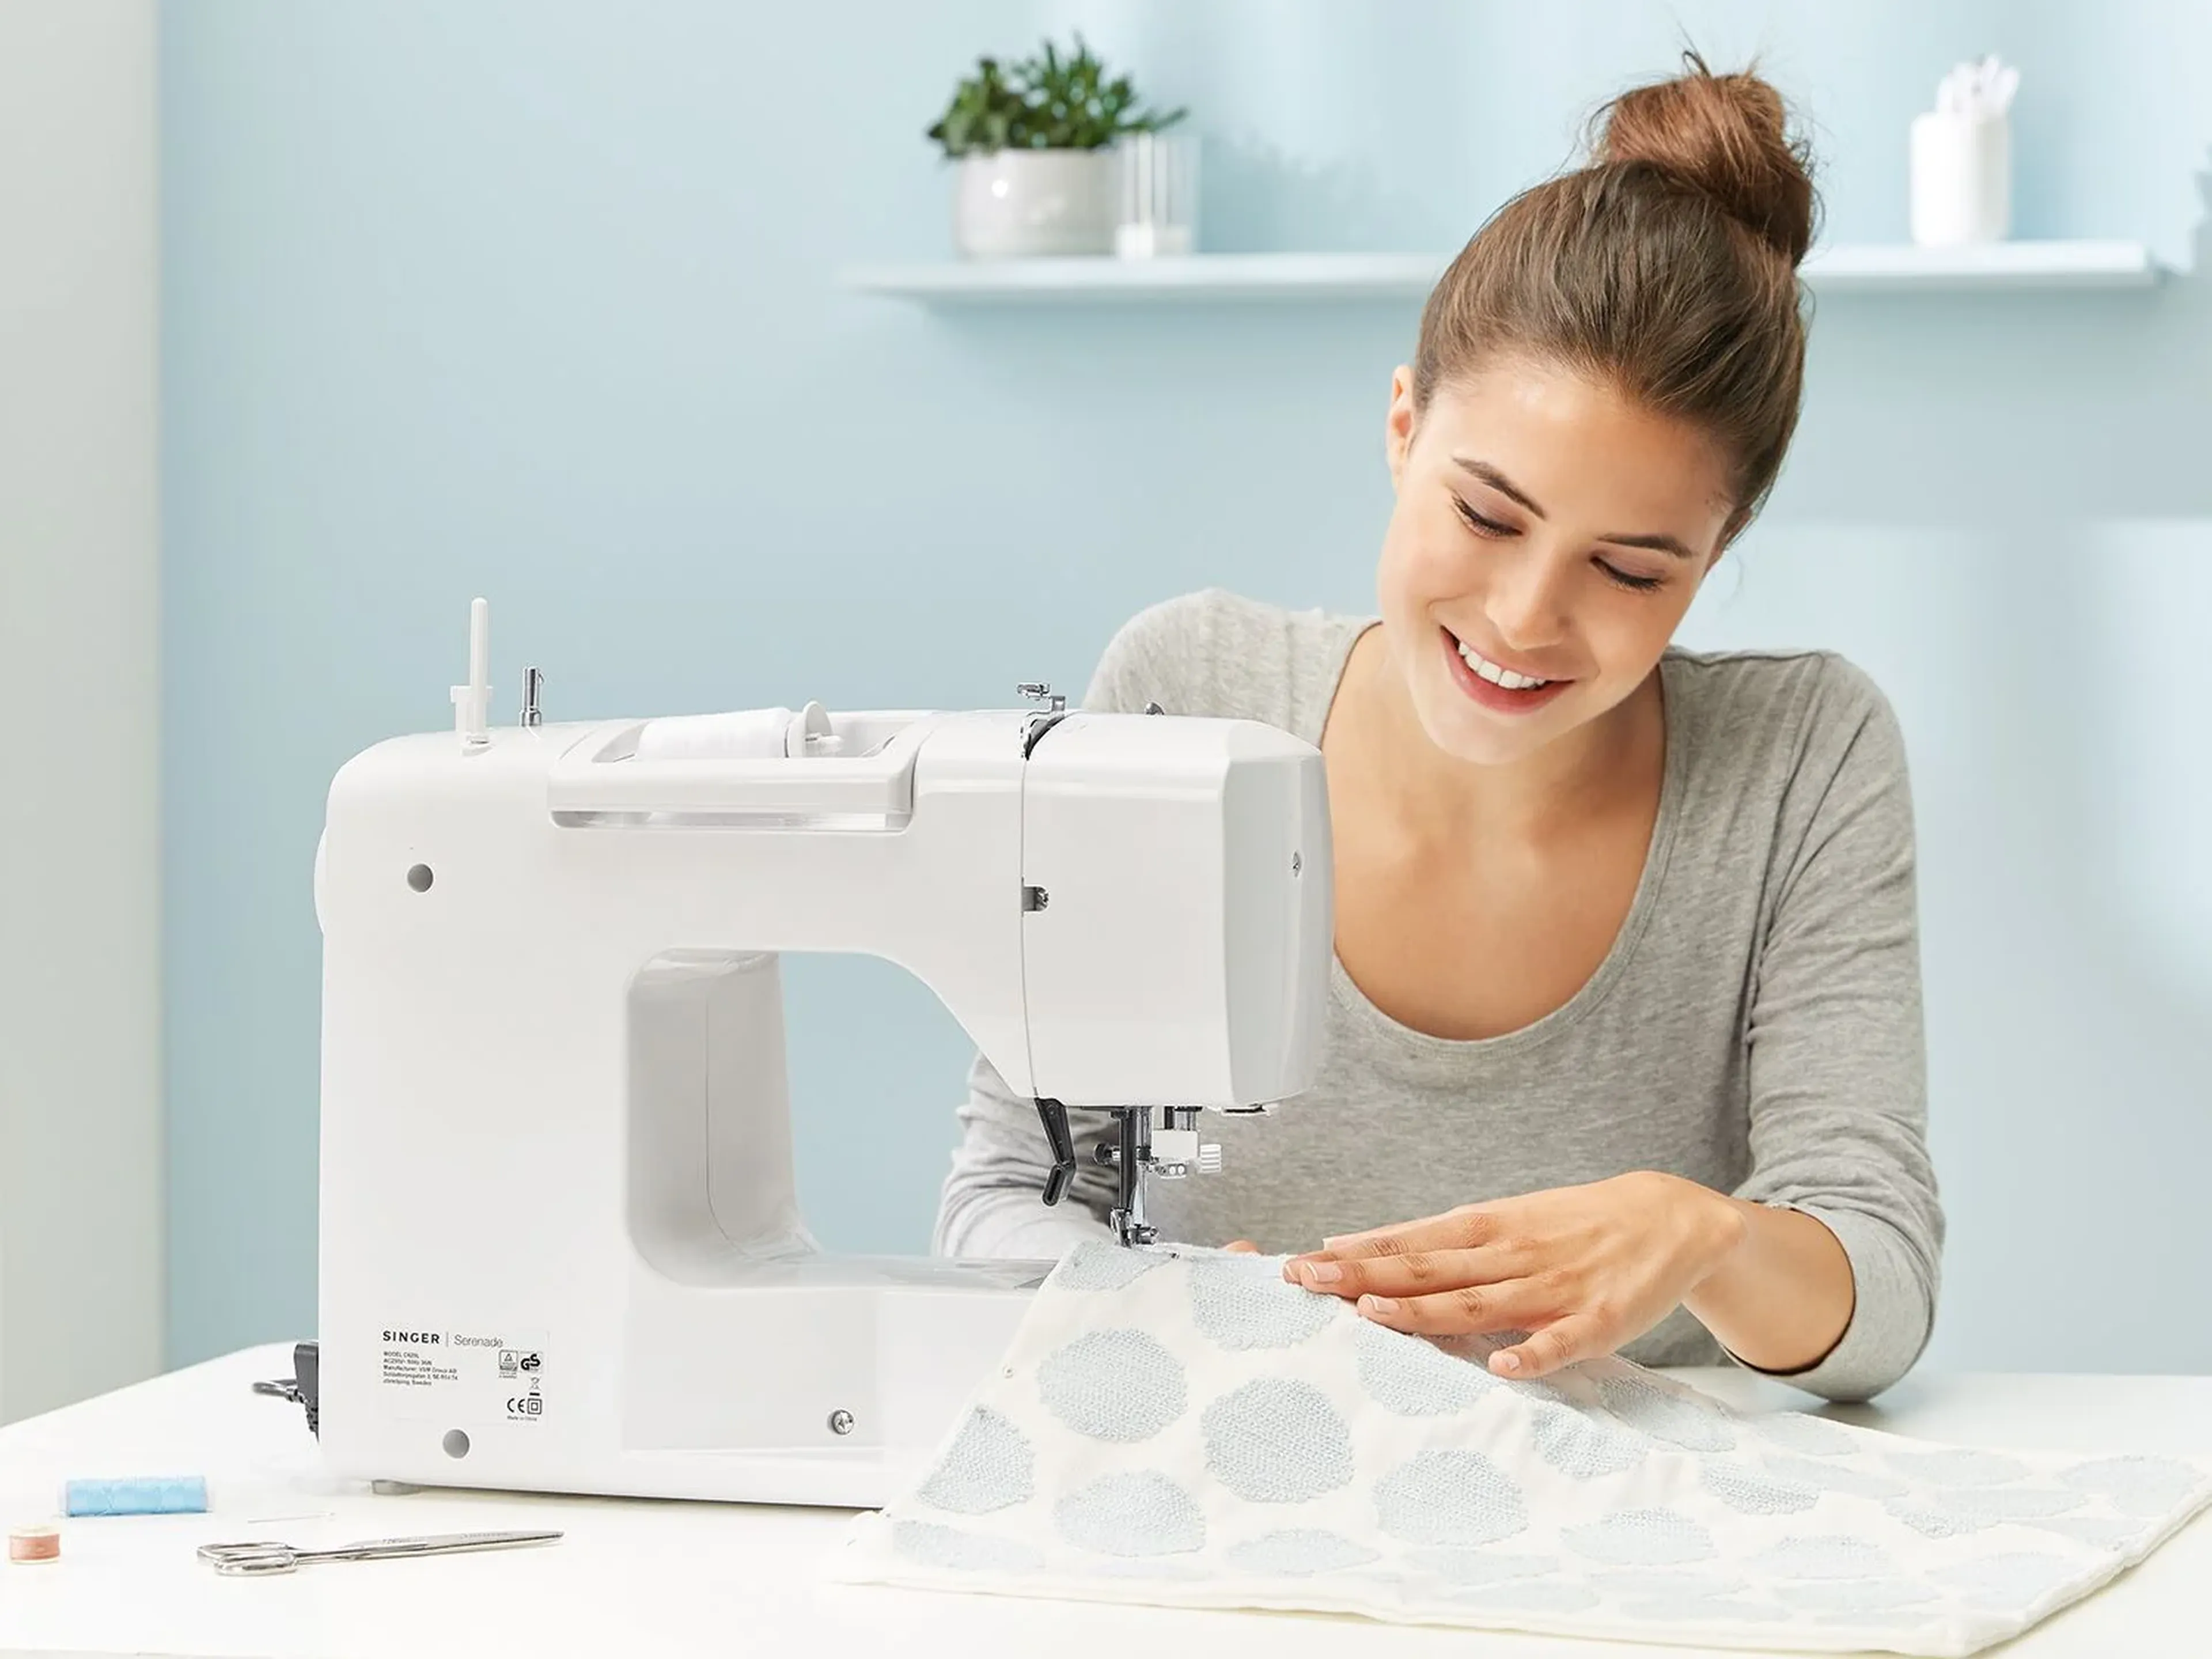 Vuelve a Lidl la máquina de coser Singer con un 66% de descuento, a 169  euros